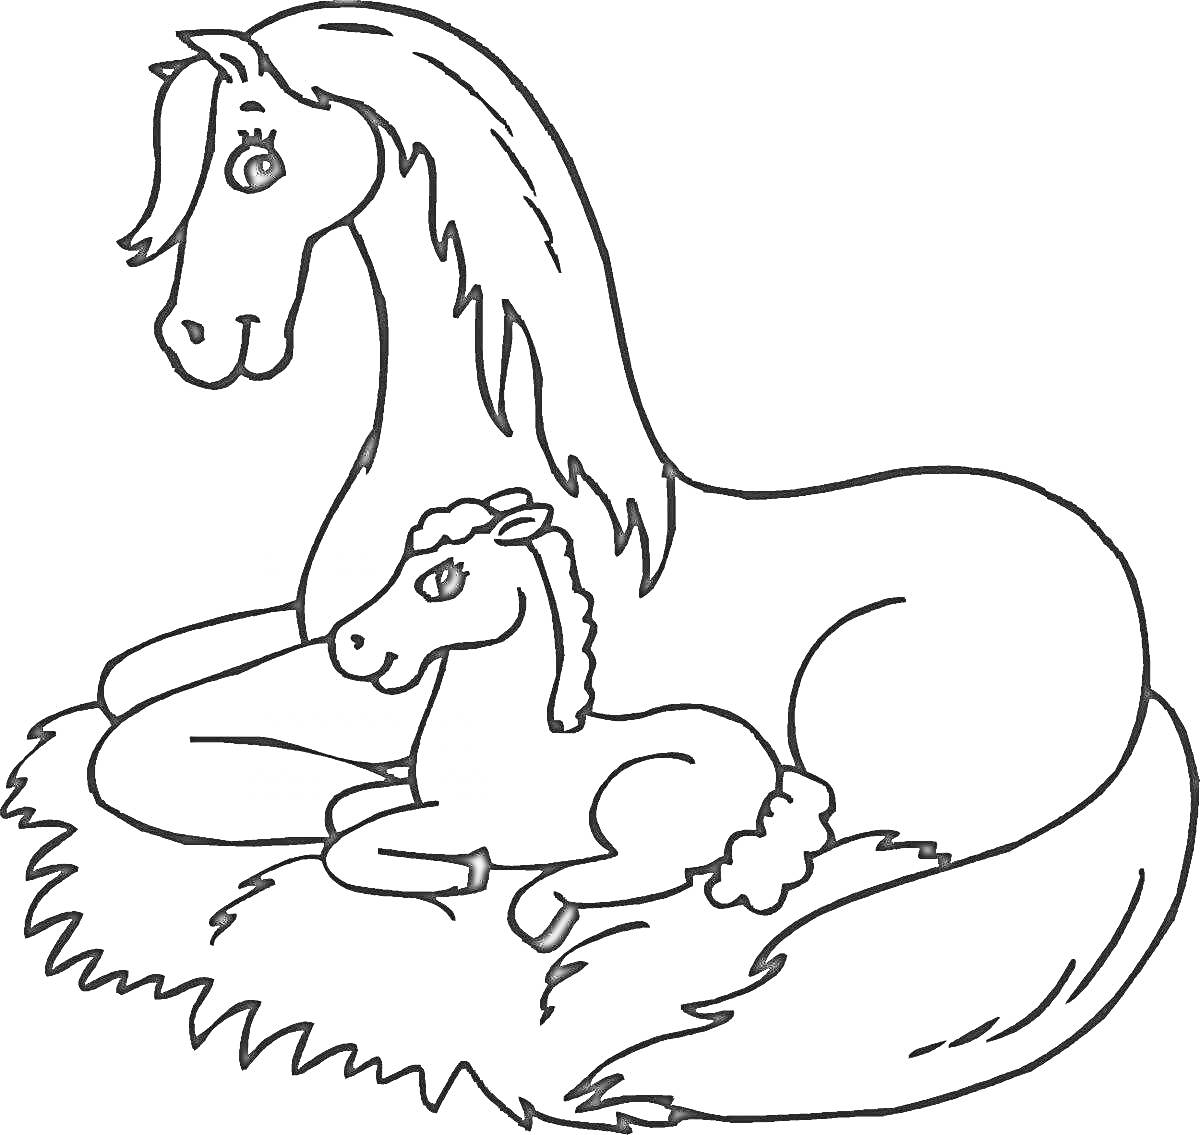 Раскраска Лошадь и жеребенок лежат вместе на траве